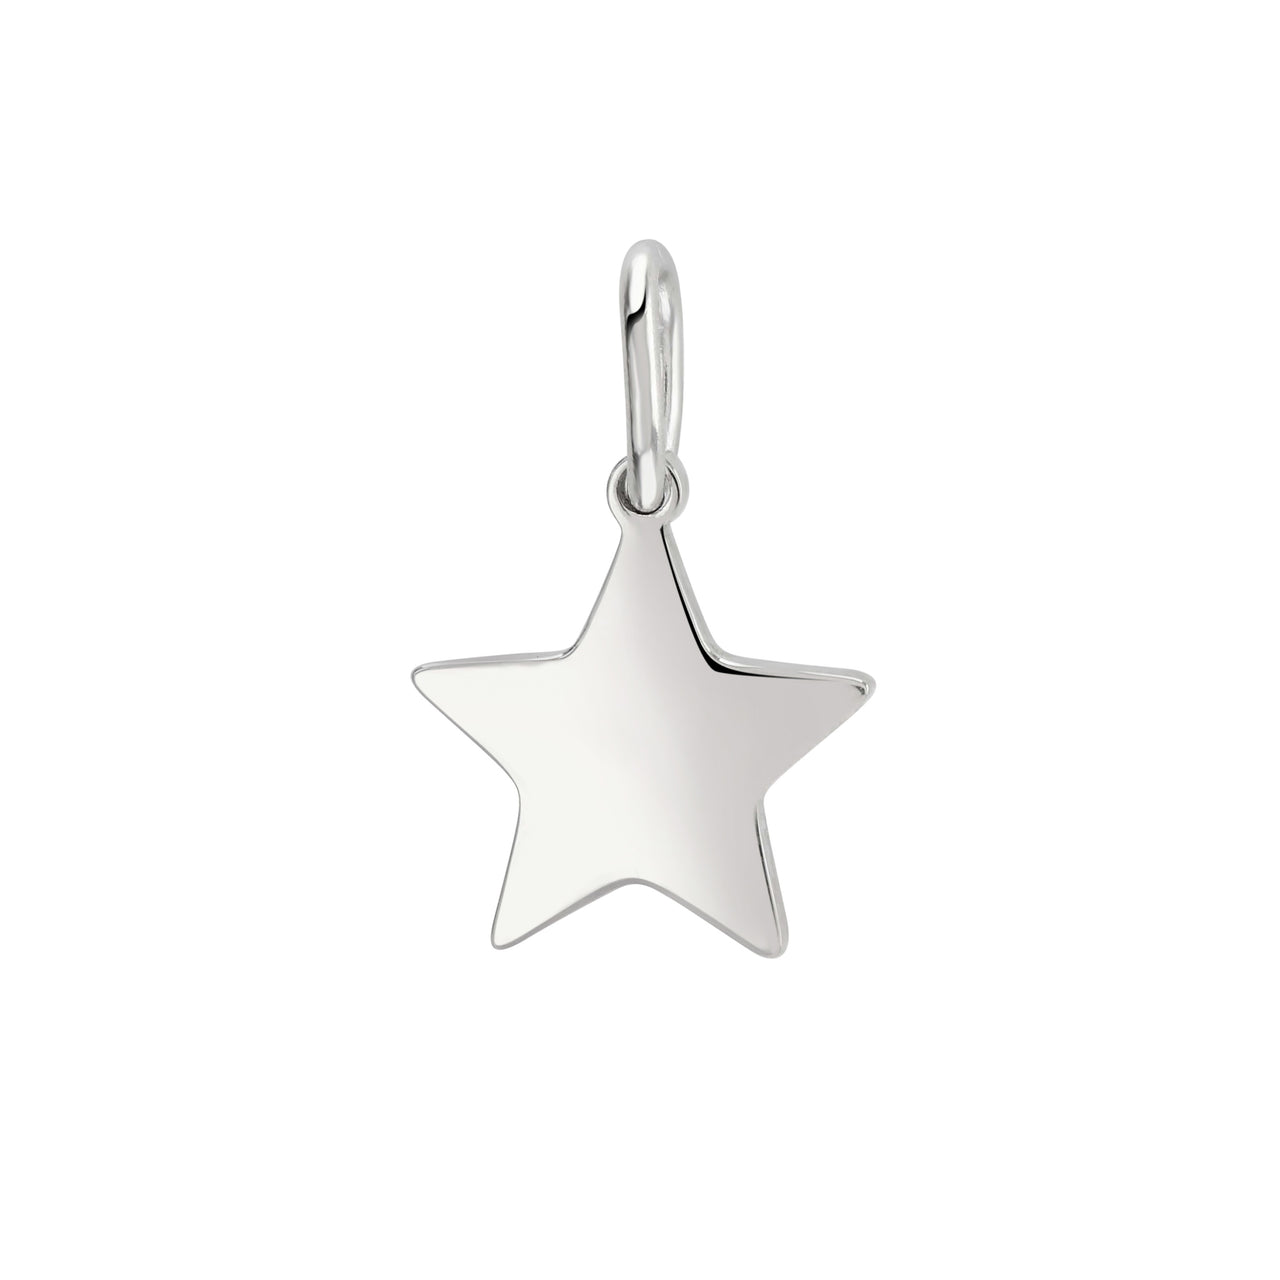 Silver Star charm